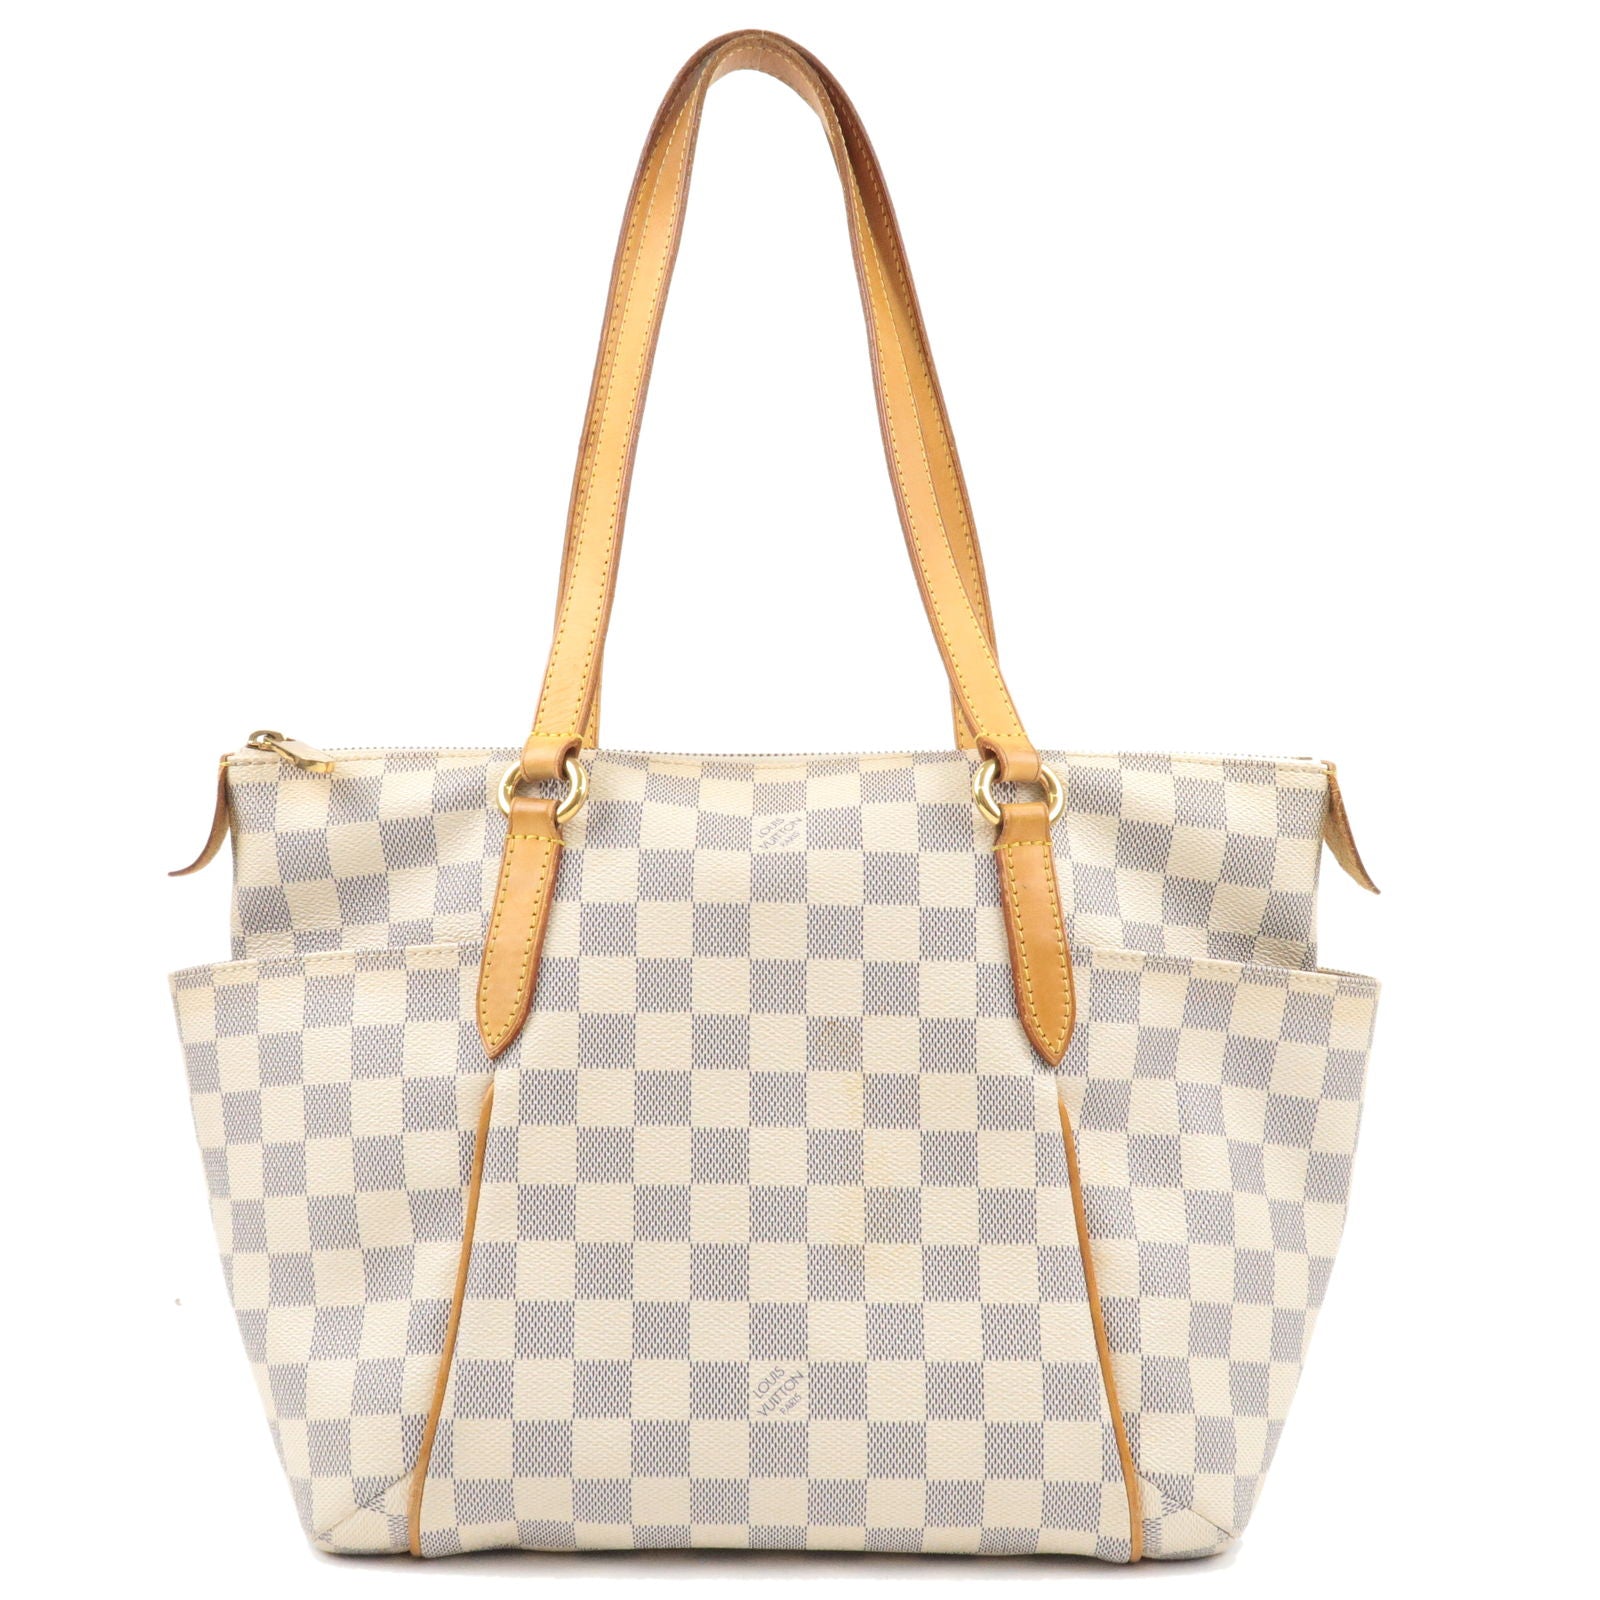 Louis Vuitton Damier Azur Shopper Bag White